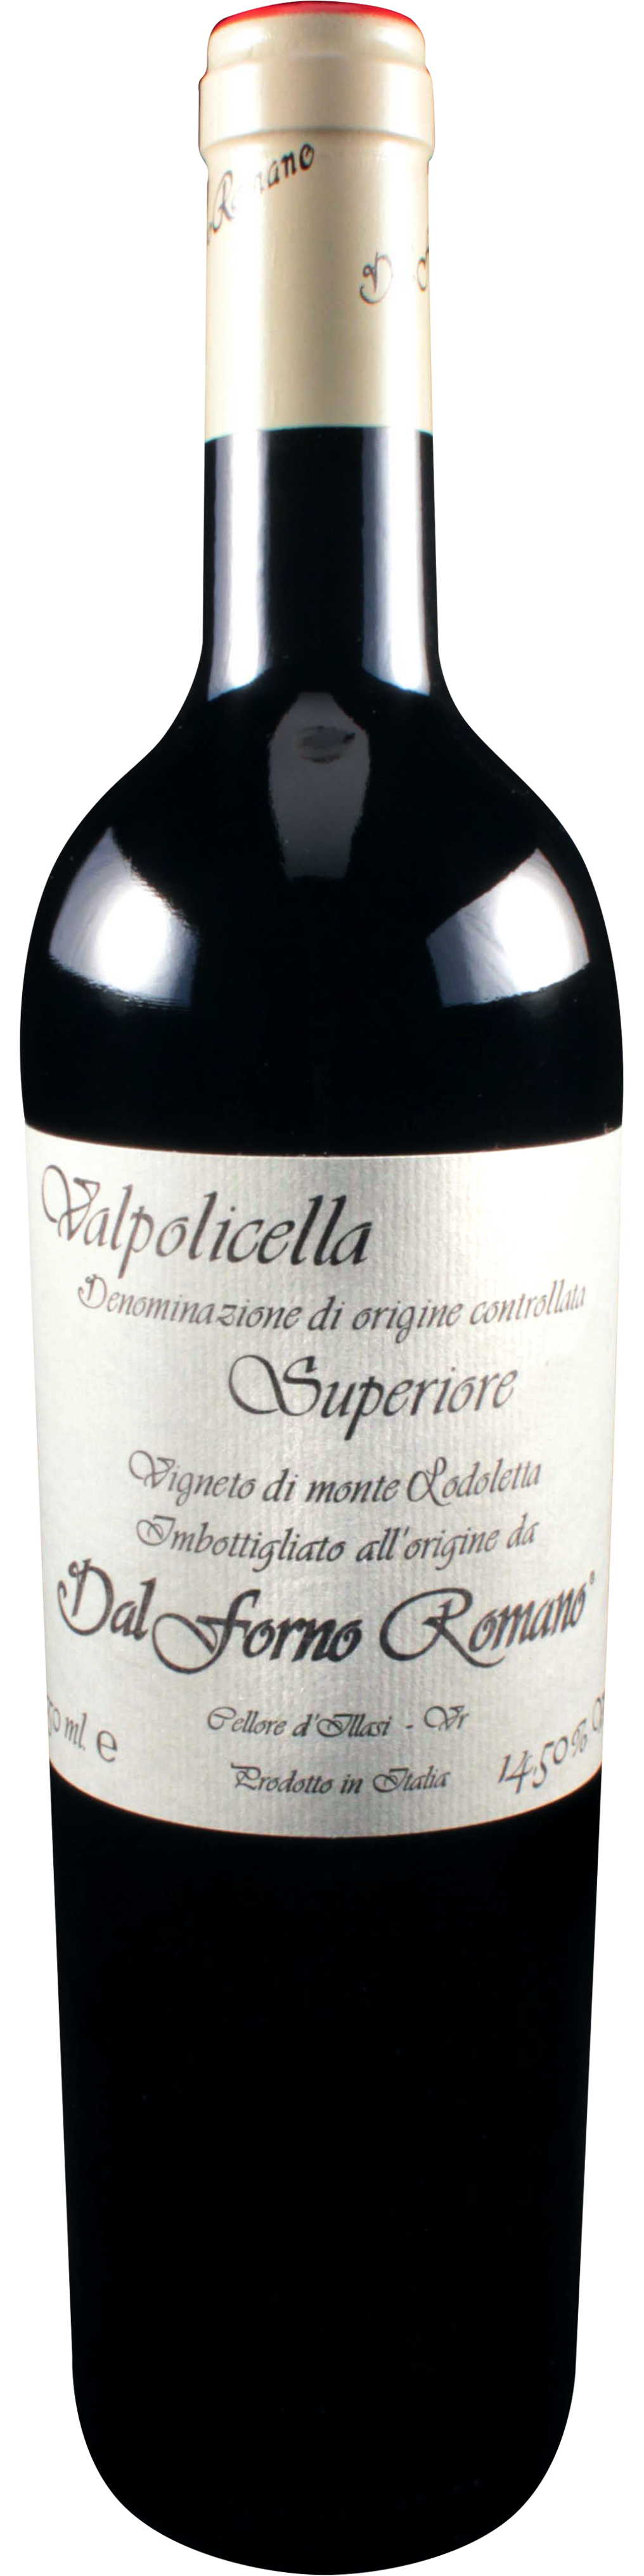 Bottle shot of 2010 Valpolicella Superiore